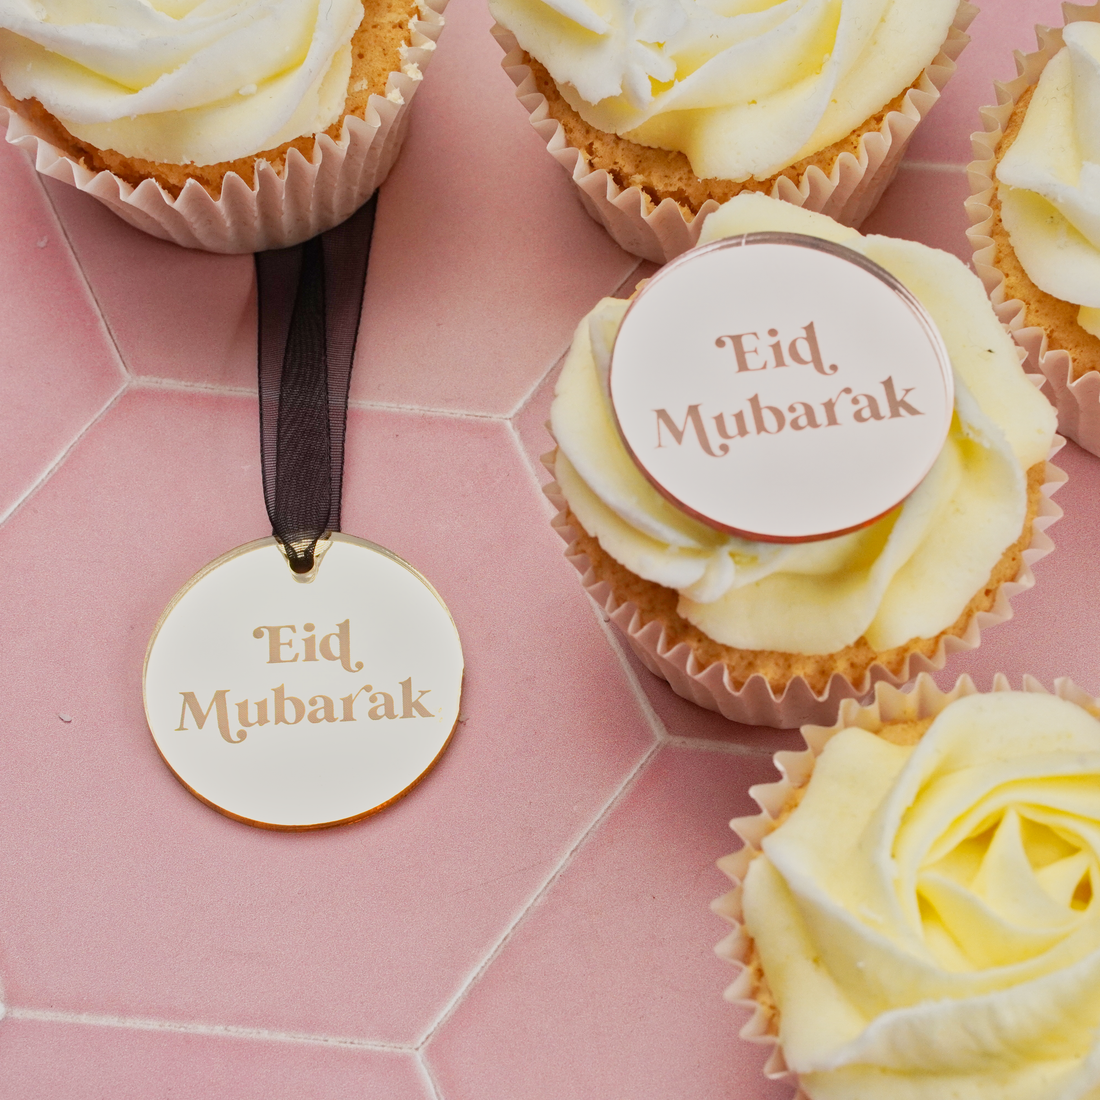 Eid Mubarak Cupcake Decorations